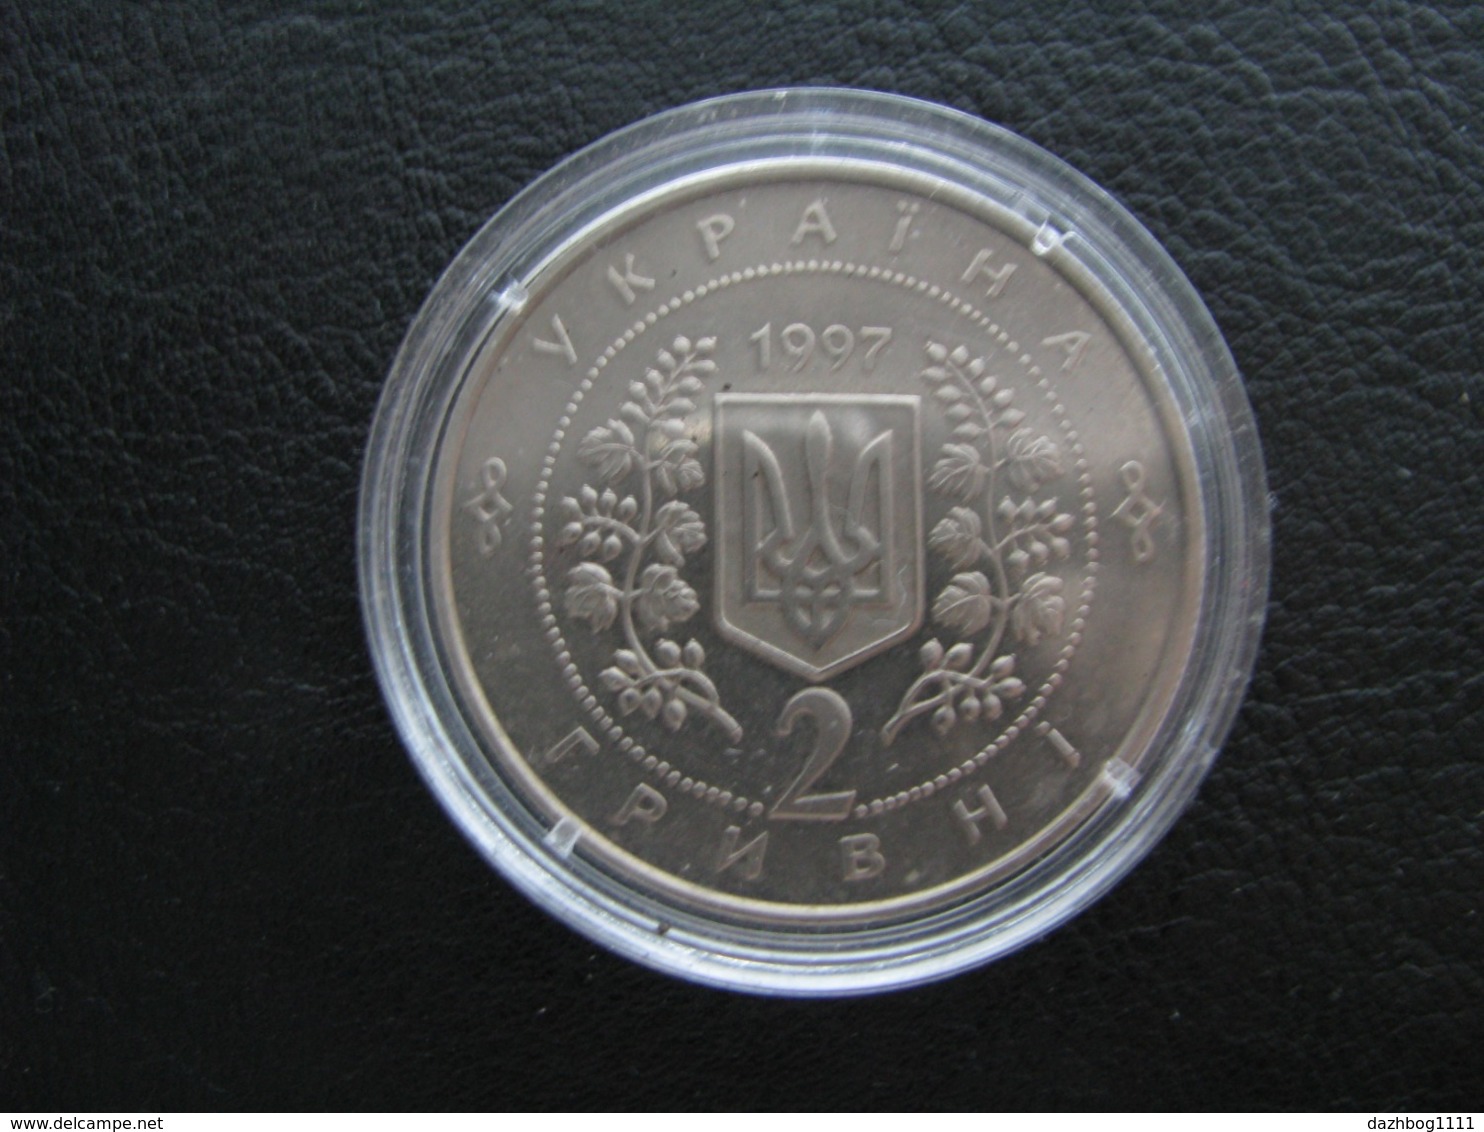 Ukraine Coin The First Anniversary Of The Сonstitution Of Ukraine 1997 2 UAH - Ukraine